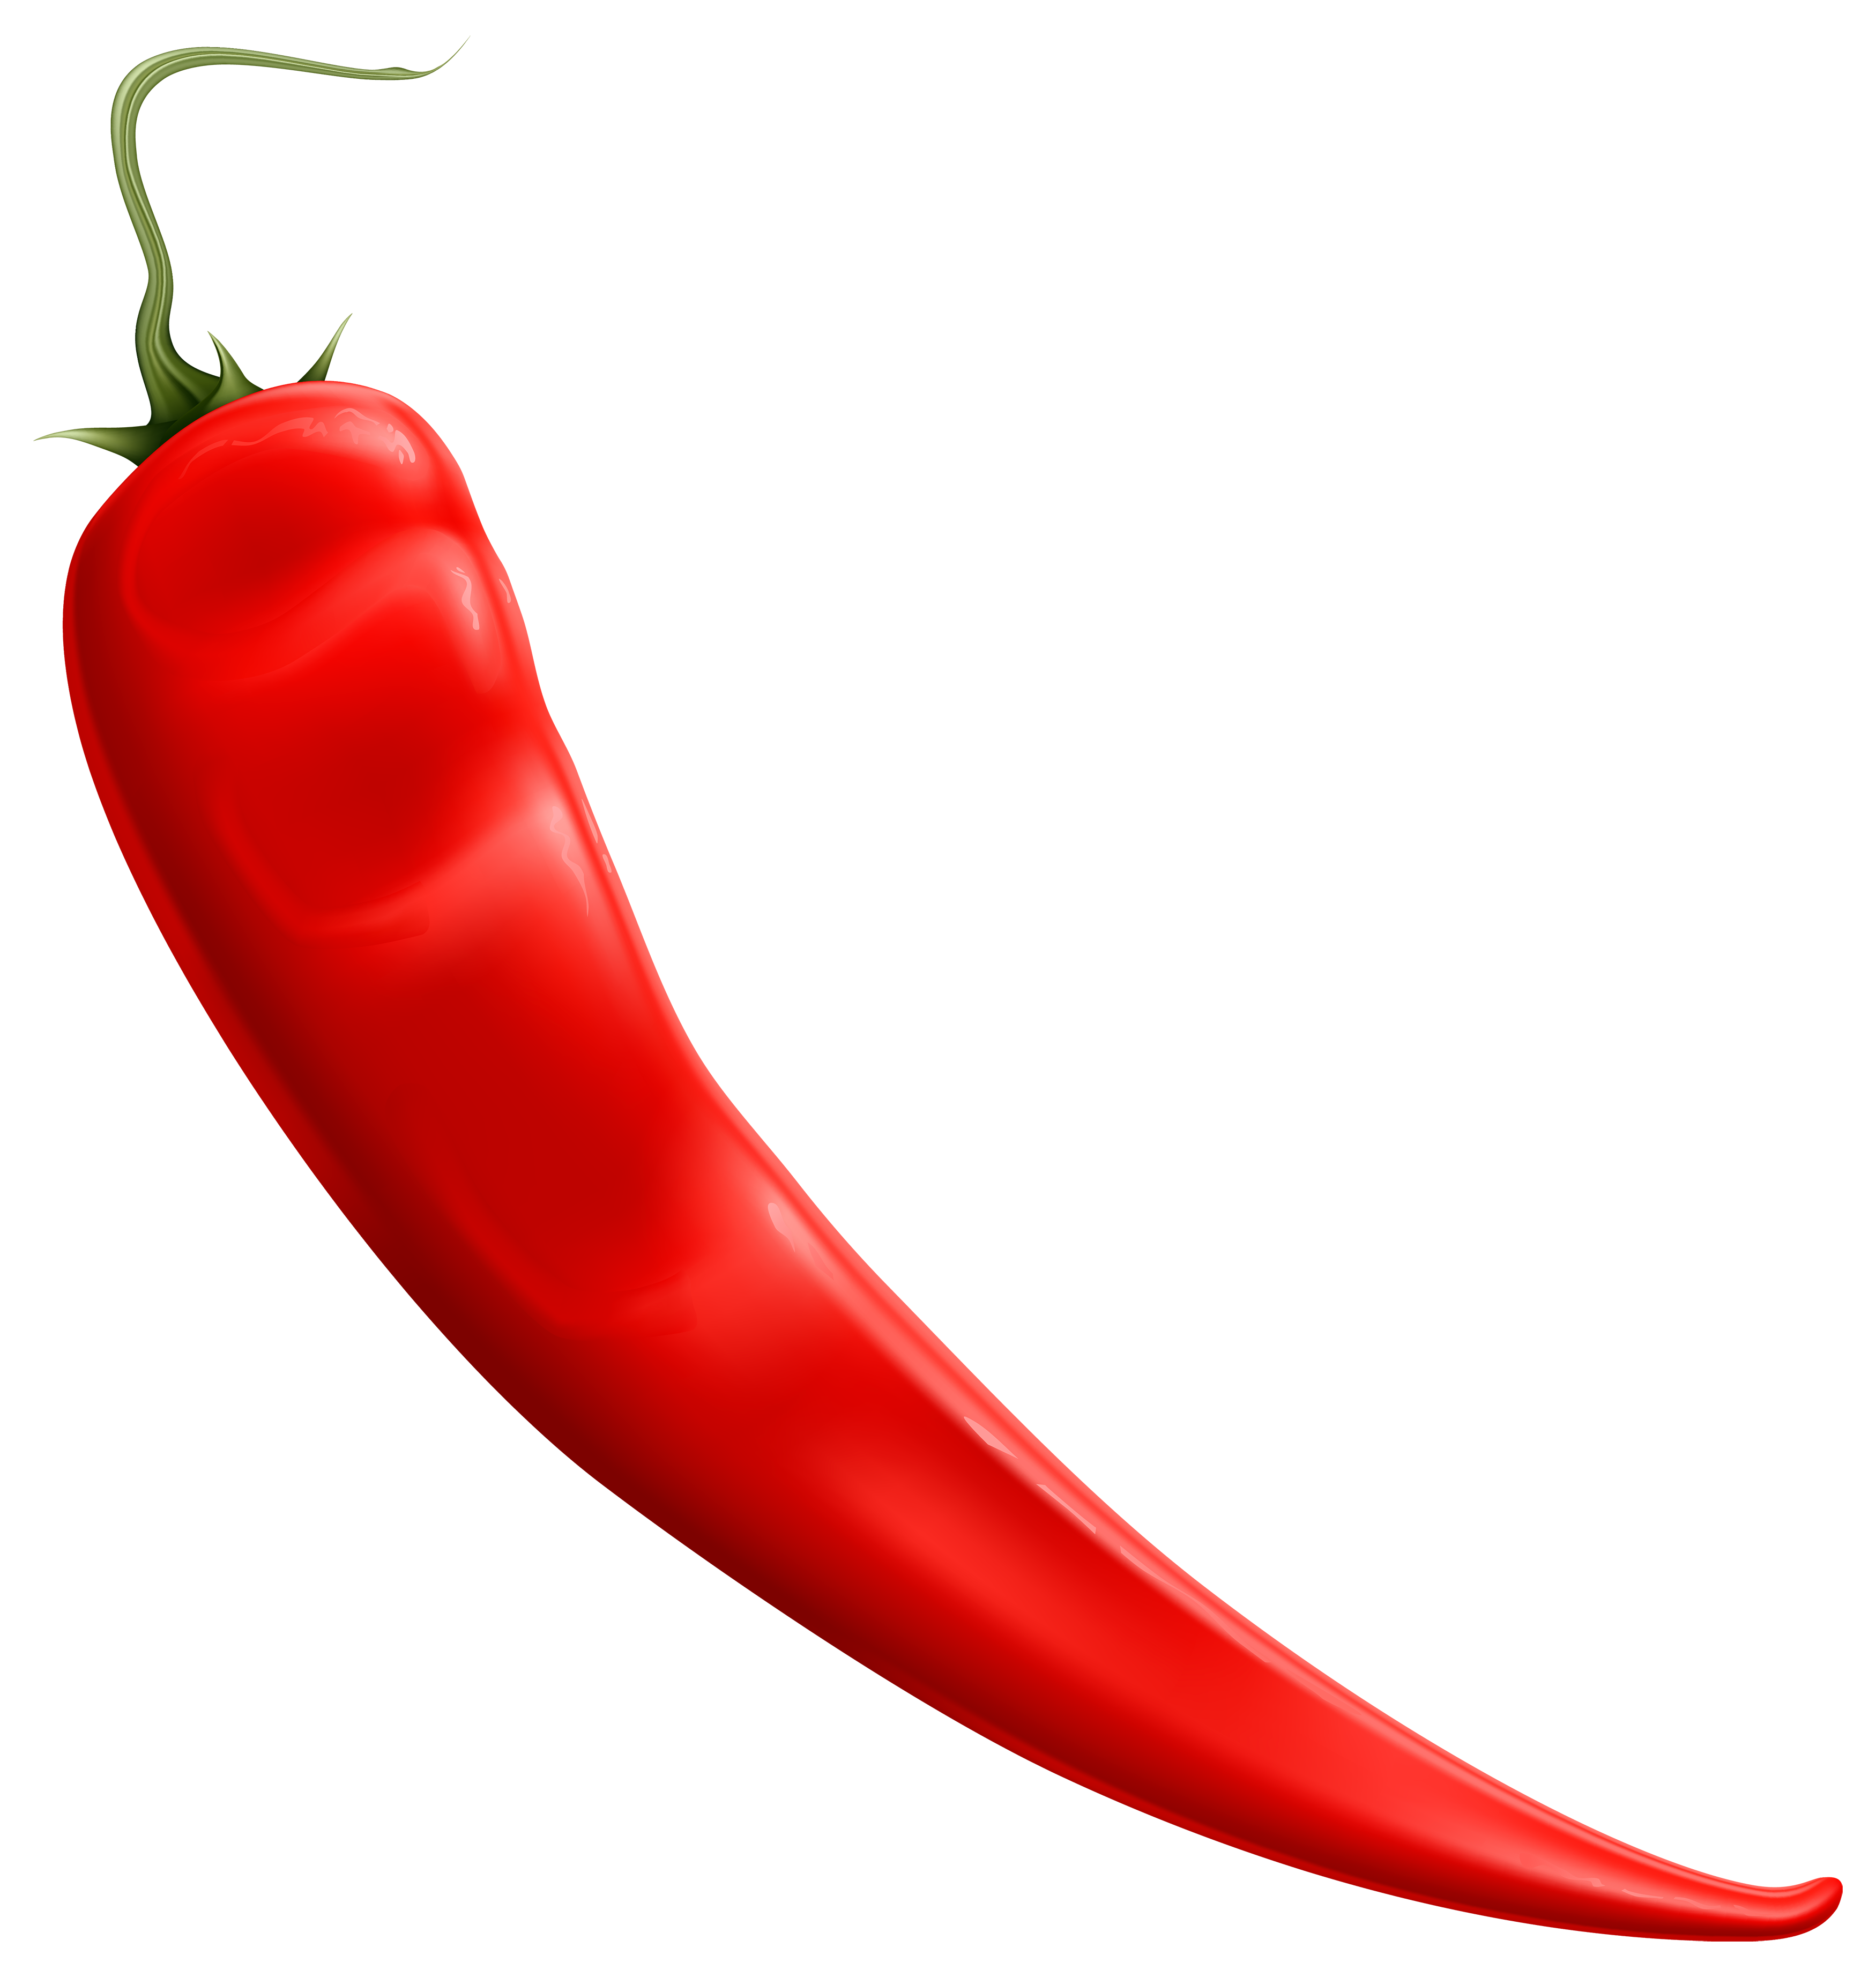 Red chili pepper clipart web